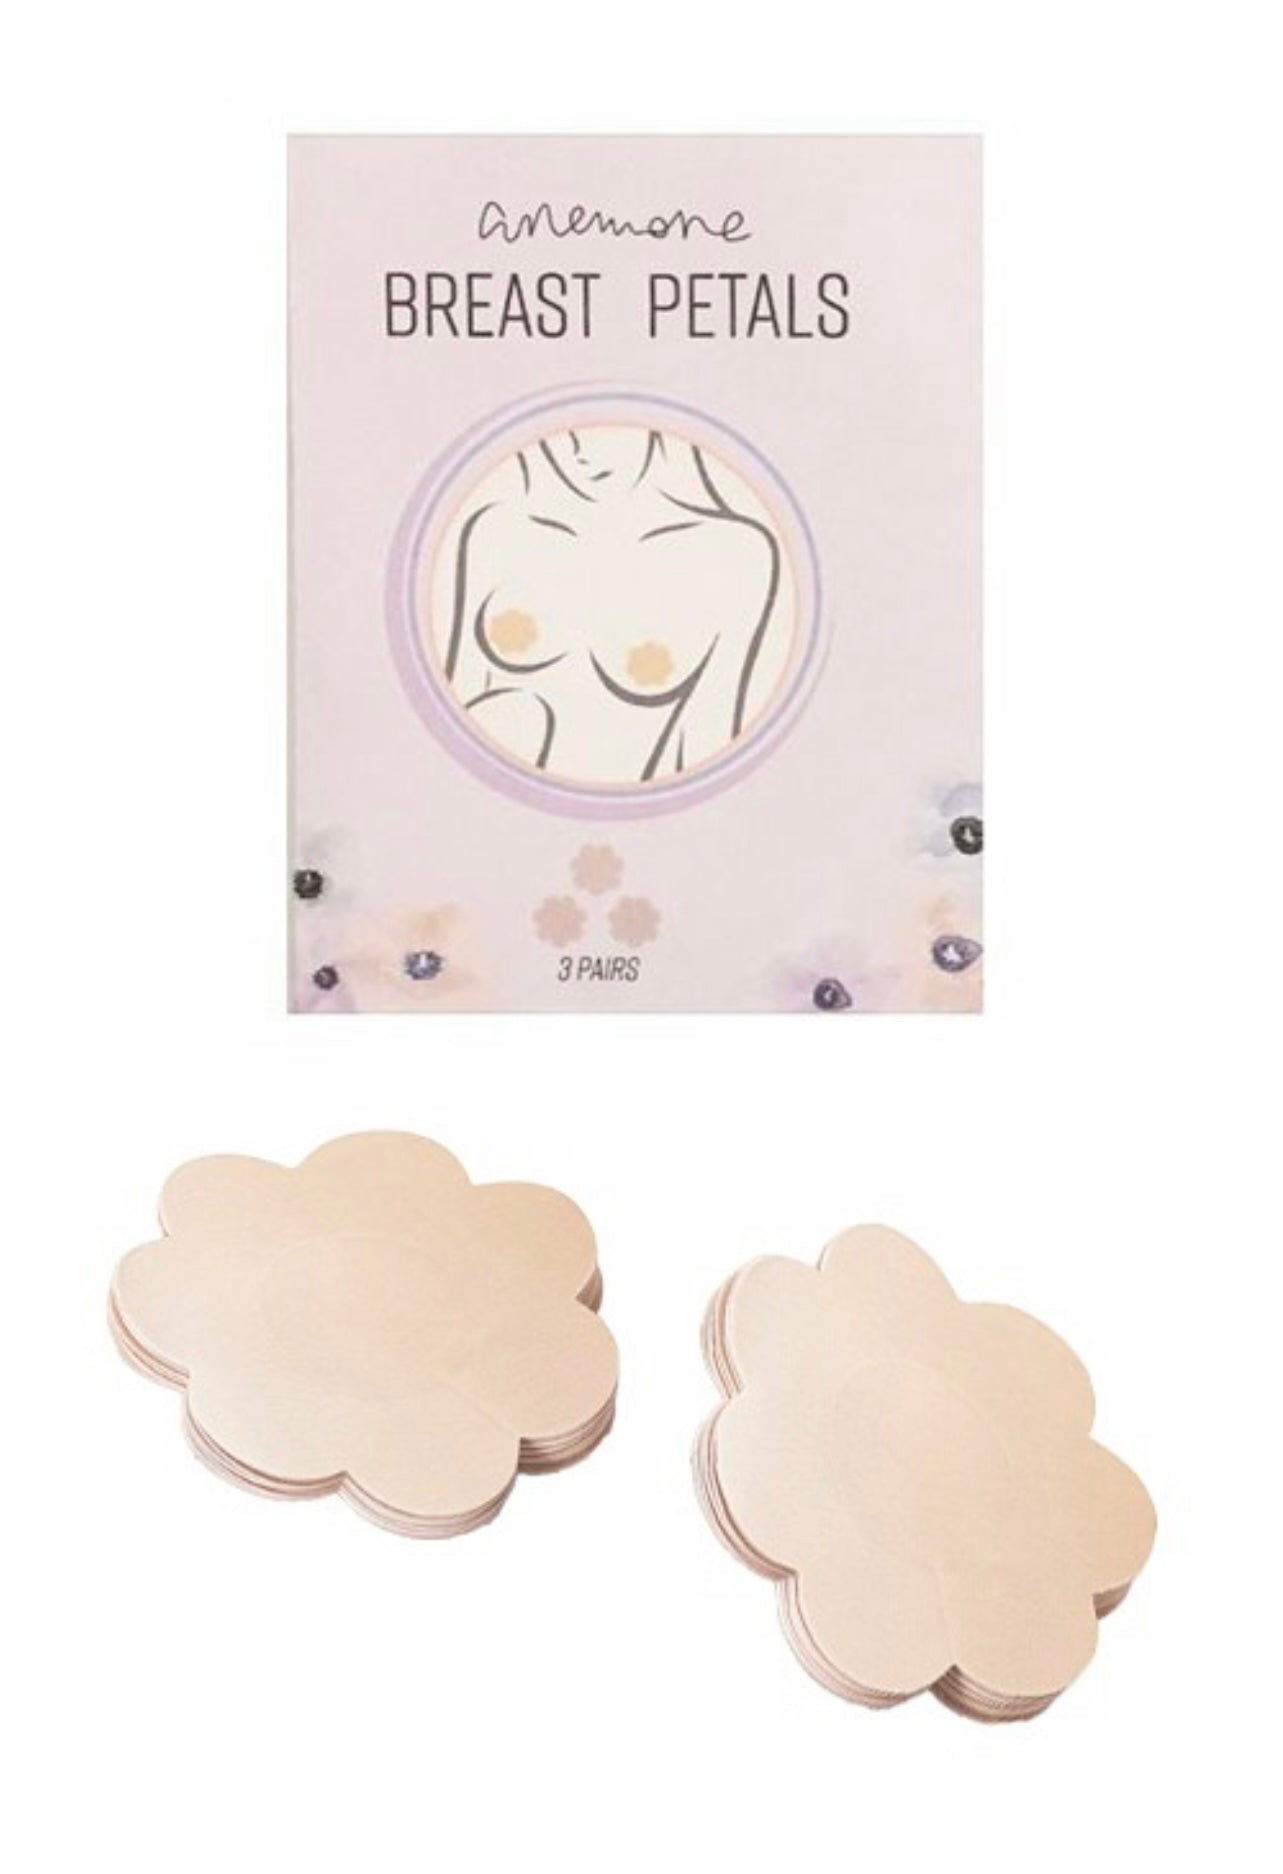 Adhesive Breast Petals